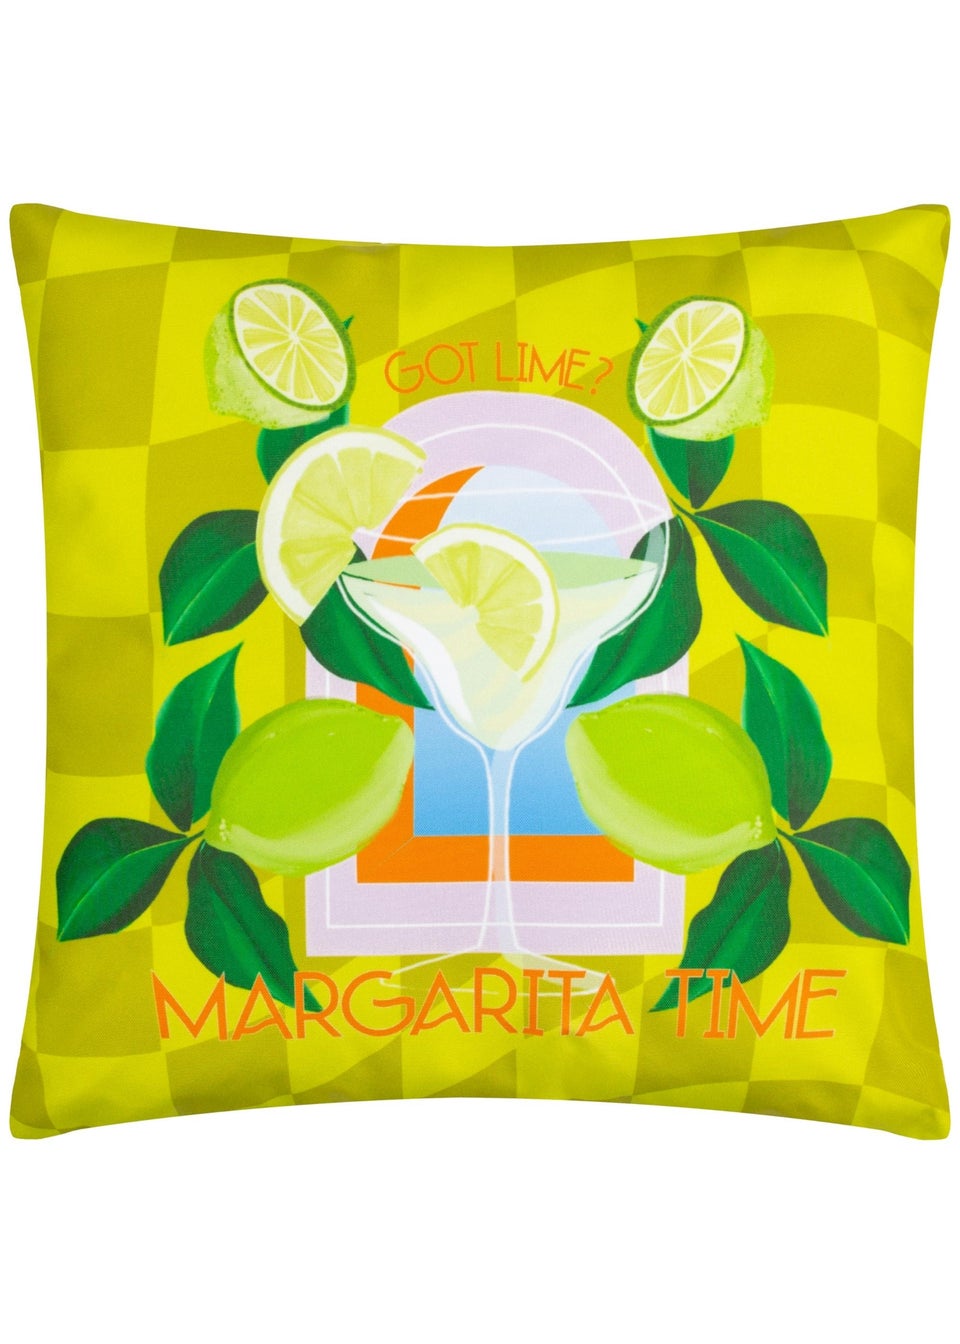 furn. Lime Margarita Filled Outdoor Cushions (43cm x 43cm x 8cm)